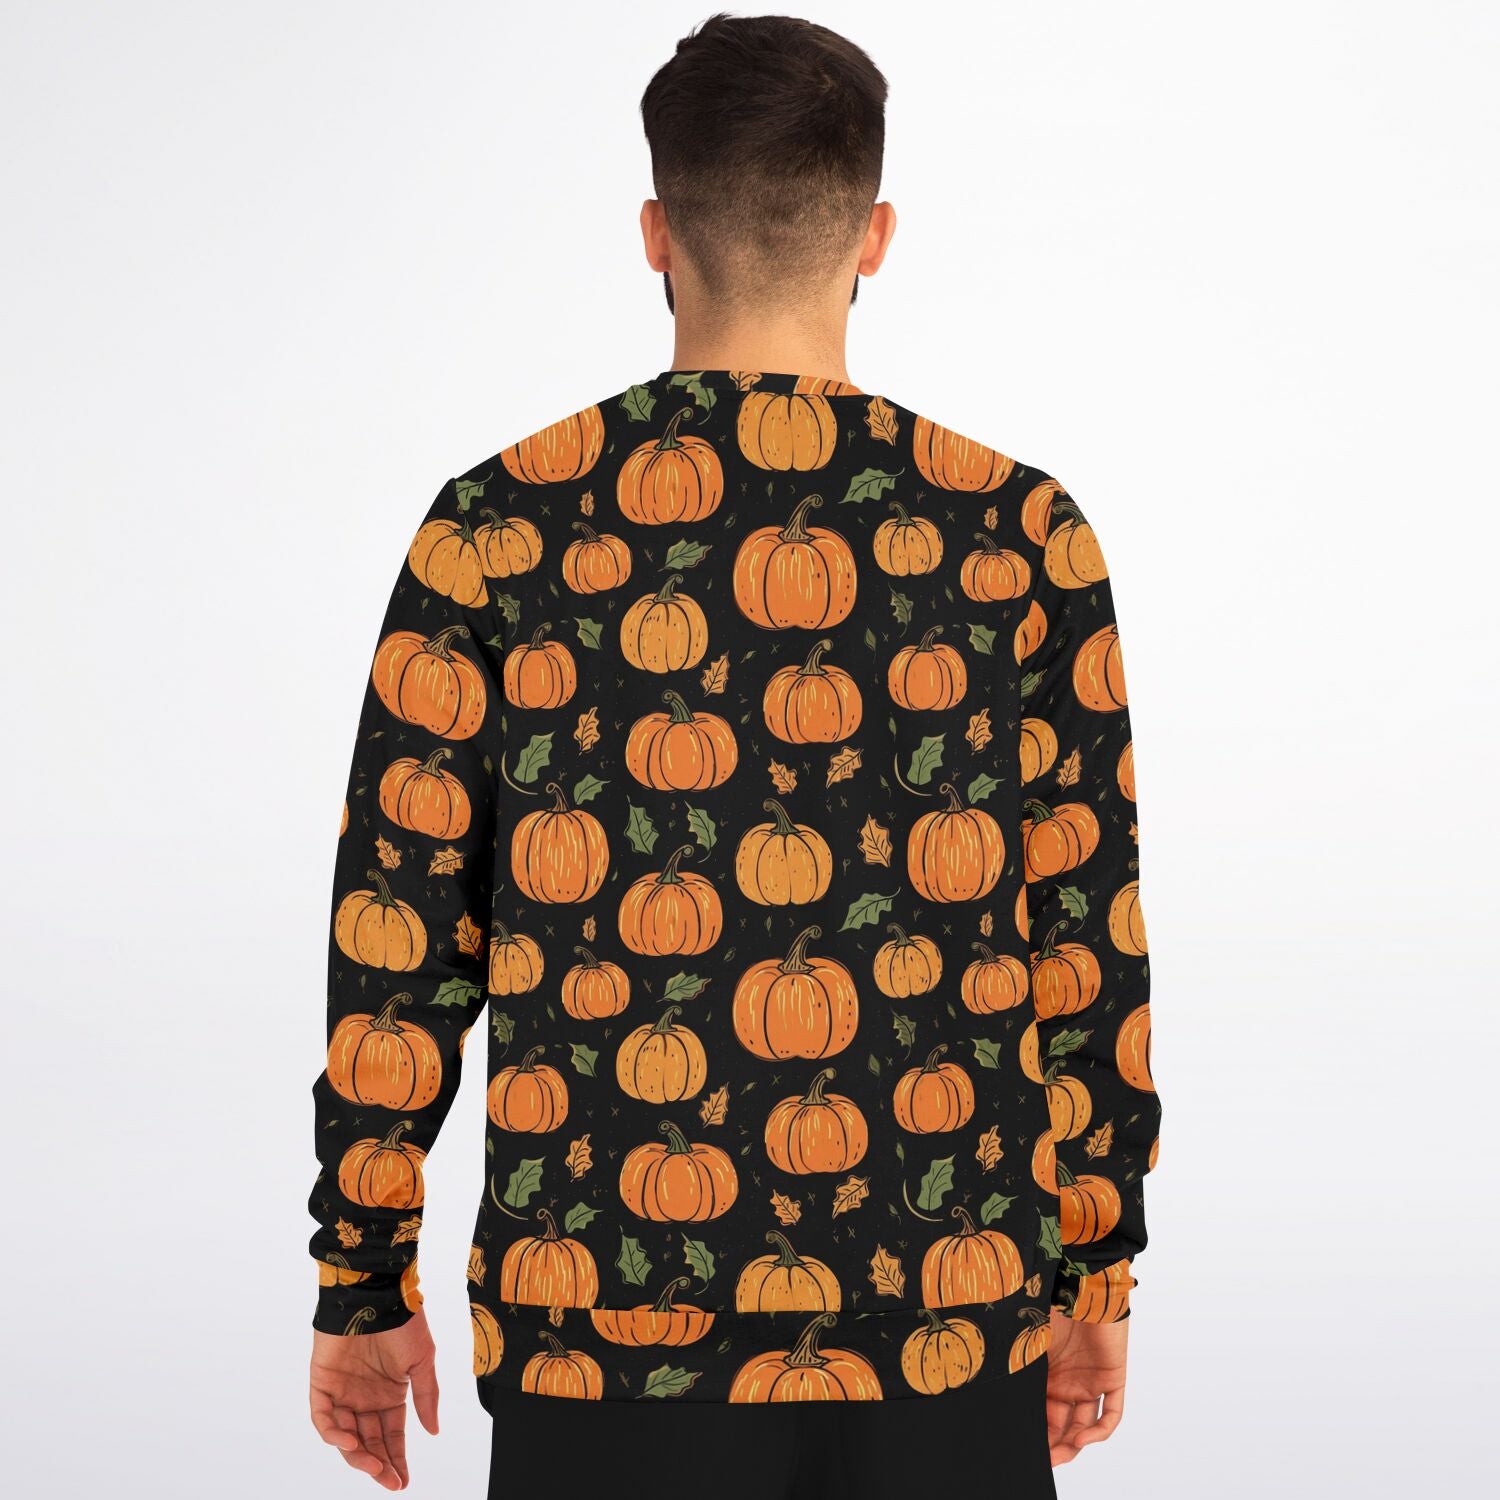 Pumpkins Sweatshirt, Fall Autumn Leaves Halloween Graphic Crewneck Cotton Sweater Jumper Pullover Men Women Adult Aesthetic Designer Top Starcove Fashion